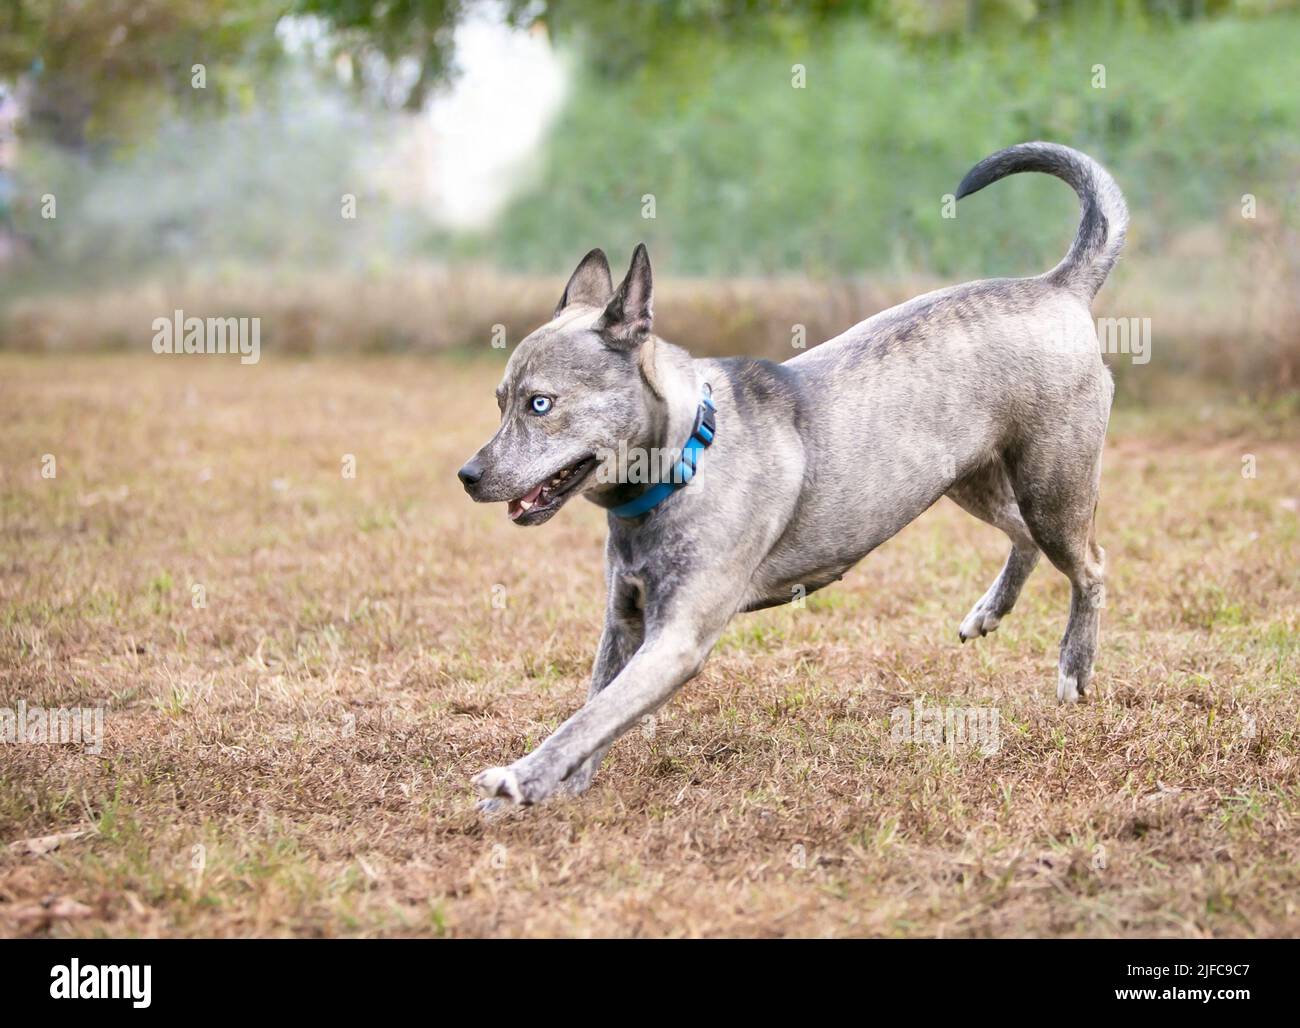 A Terrier x Australian Cattle Dog mixed breed dog running outdoors Stock Photo